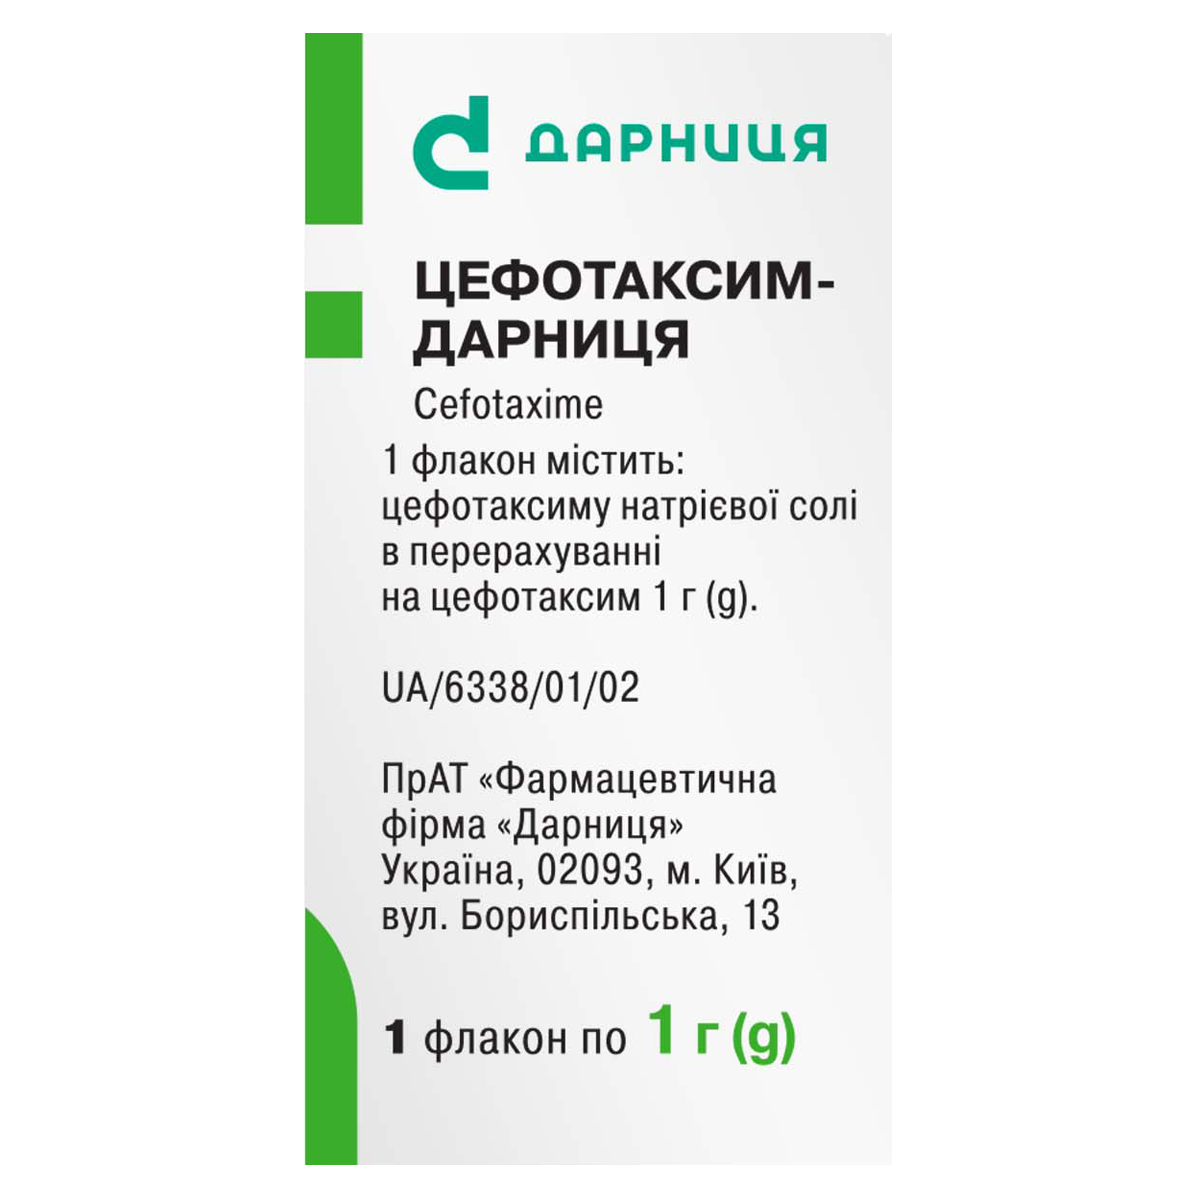 Цефотаксим-Дарниця фармацевтична компанія «Дарниця»